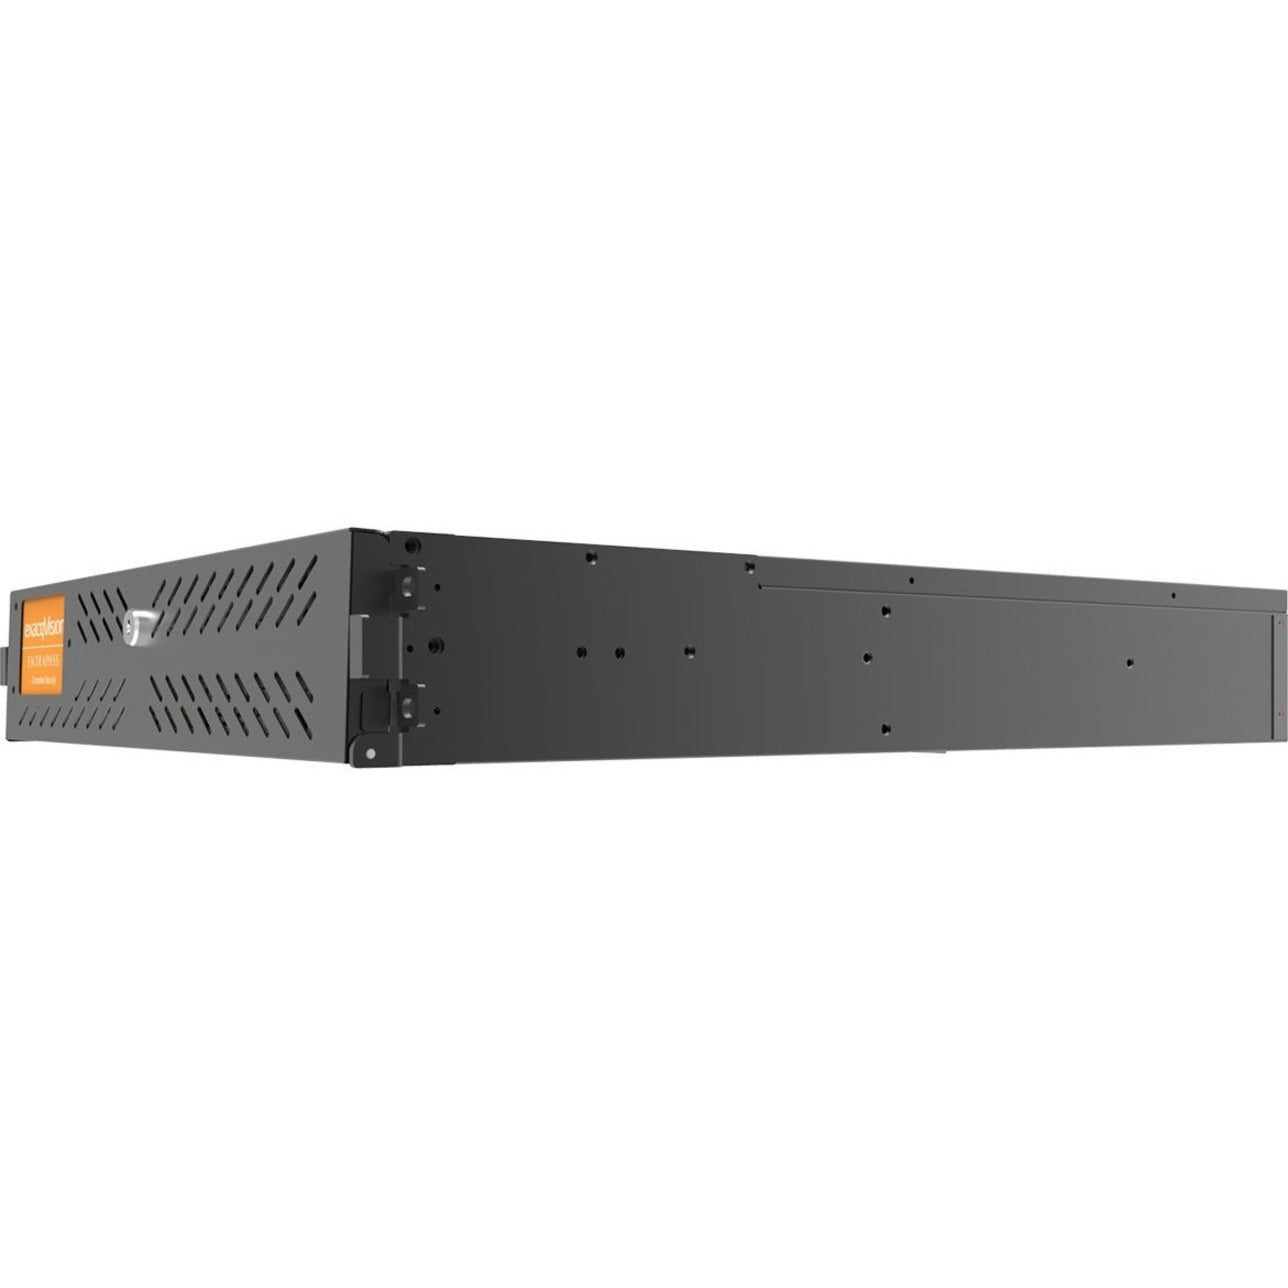 Exacq exacqVision Z Network Surveillance Server - 12 TB HDD